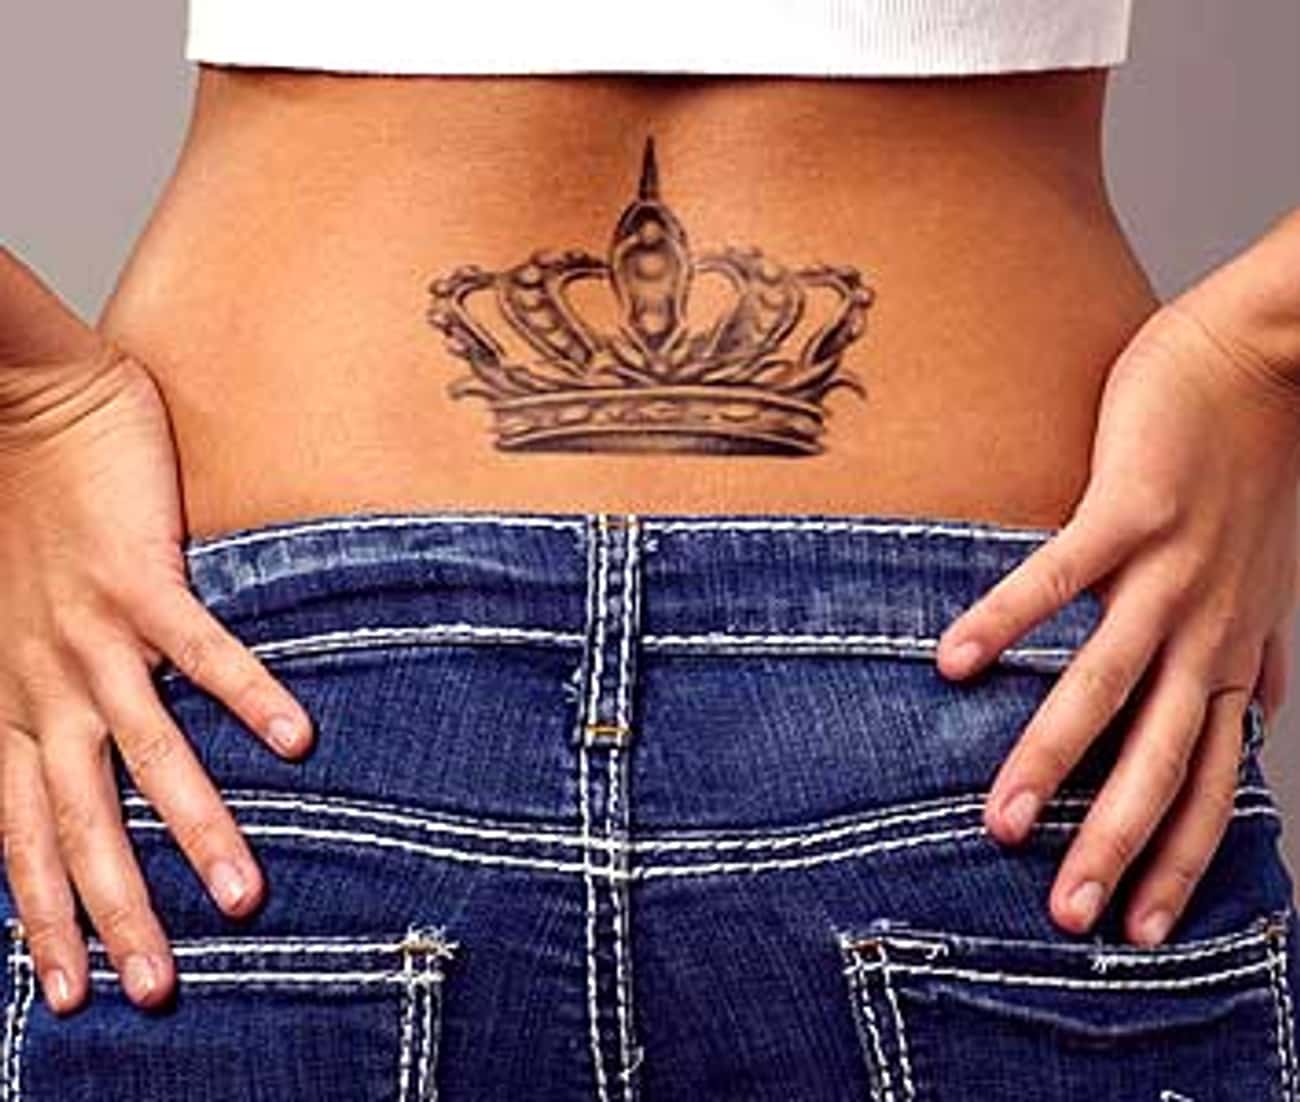 Crown Lower Back Tattoos